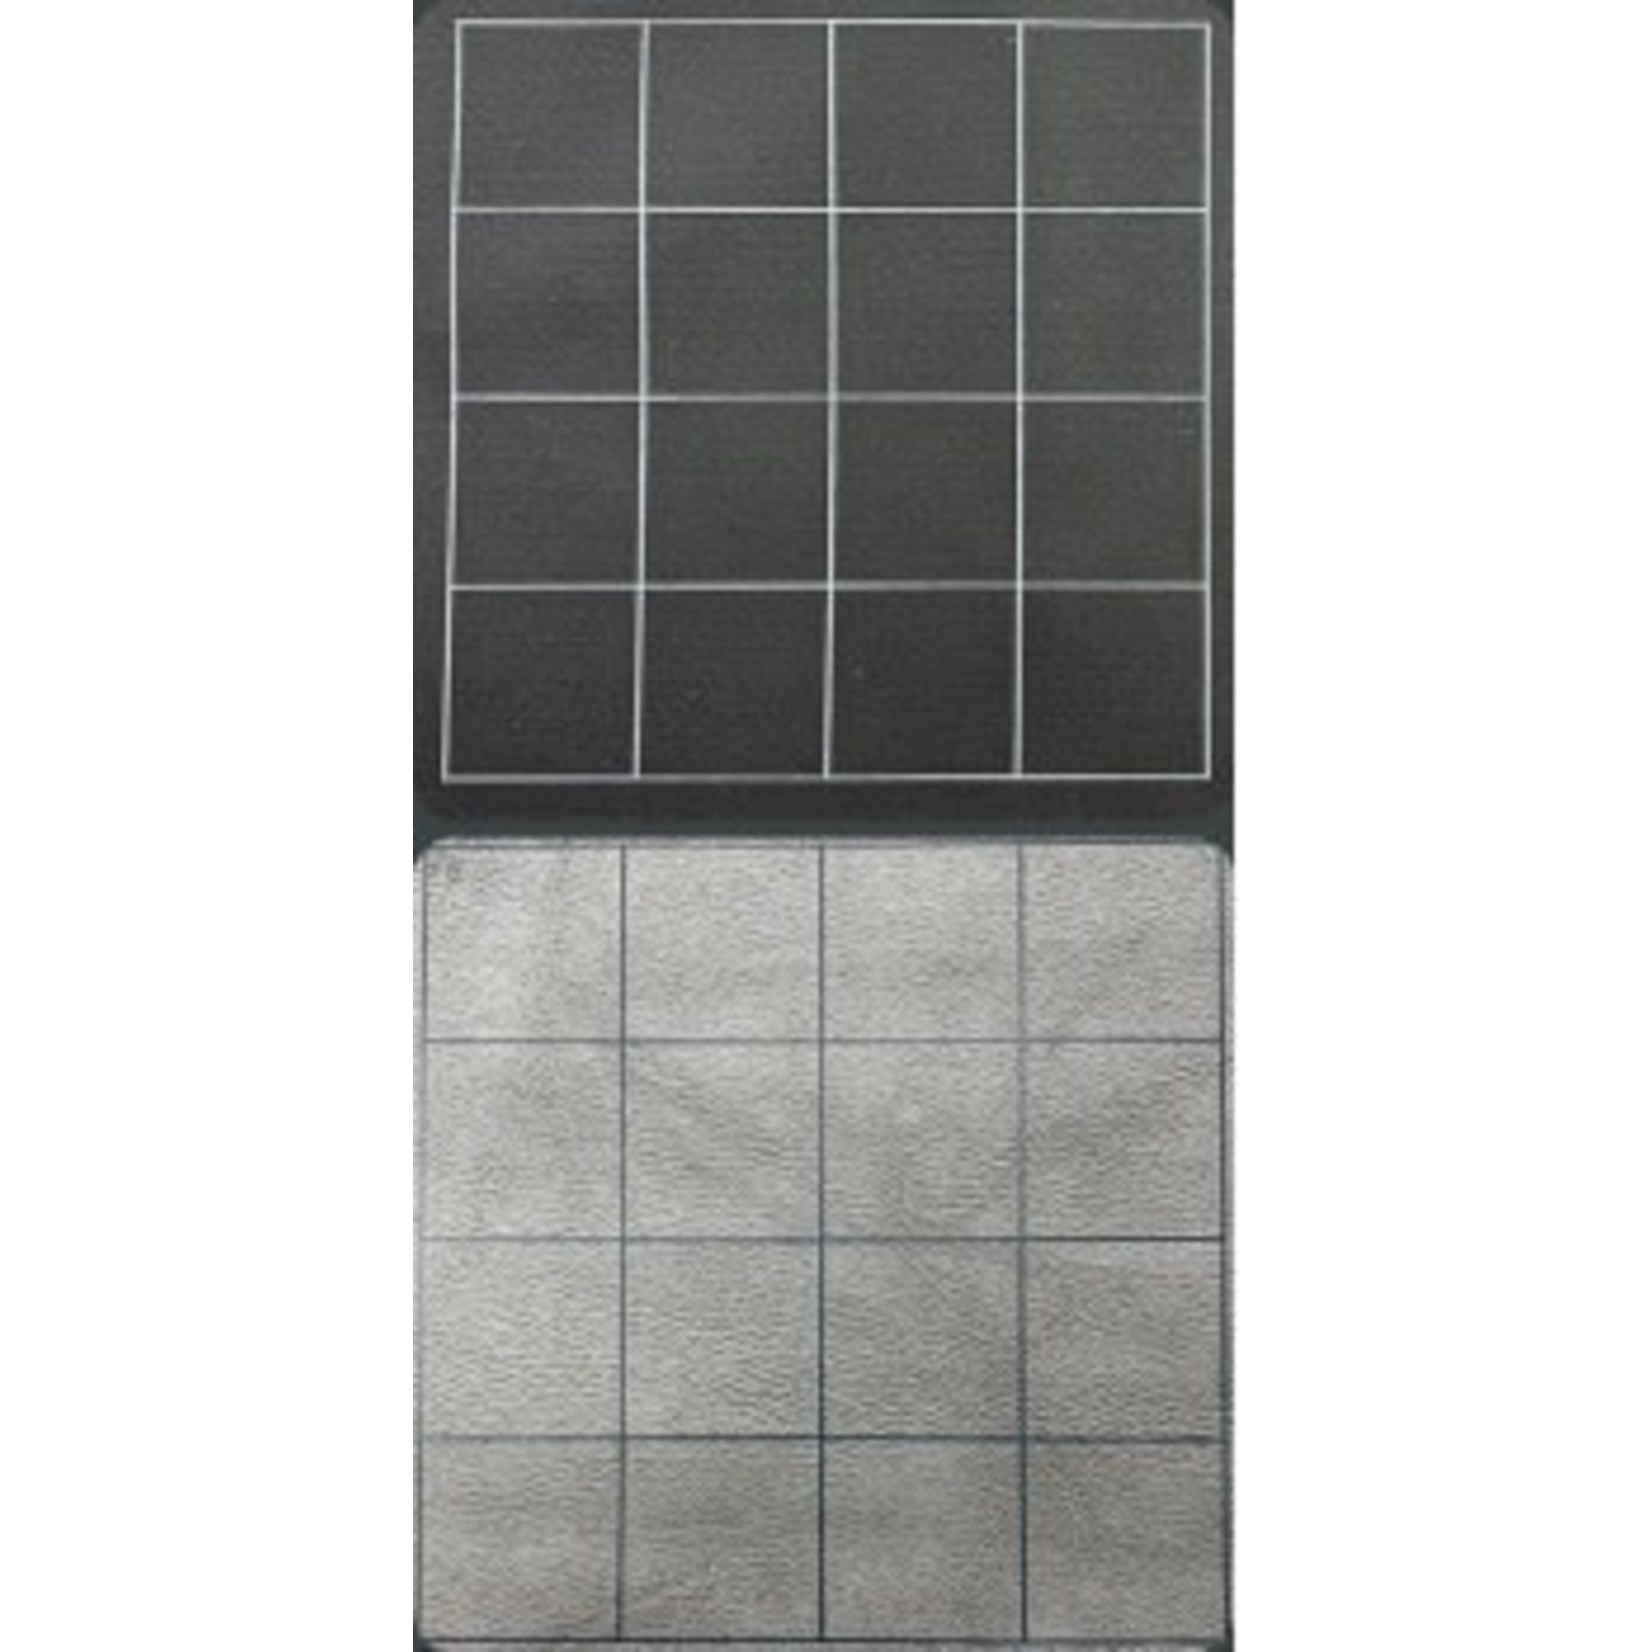 Chessex Battle Mat 97480 Megamat Square 34.5x48 inch Reversable Black Grey